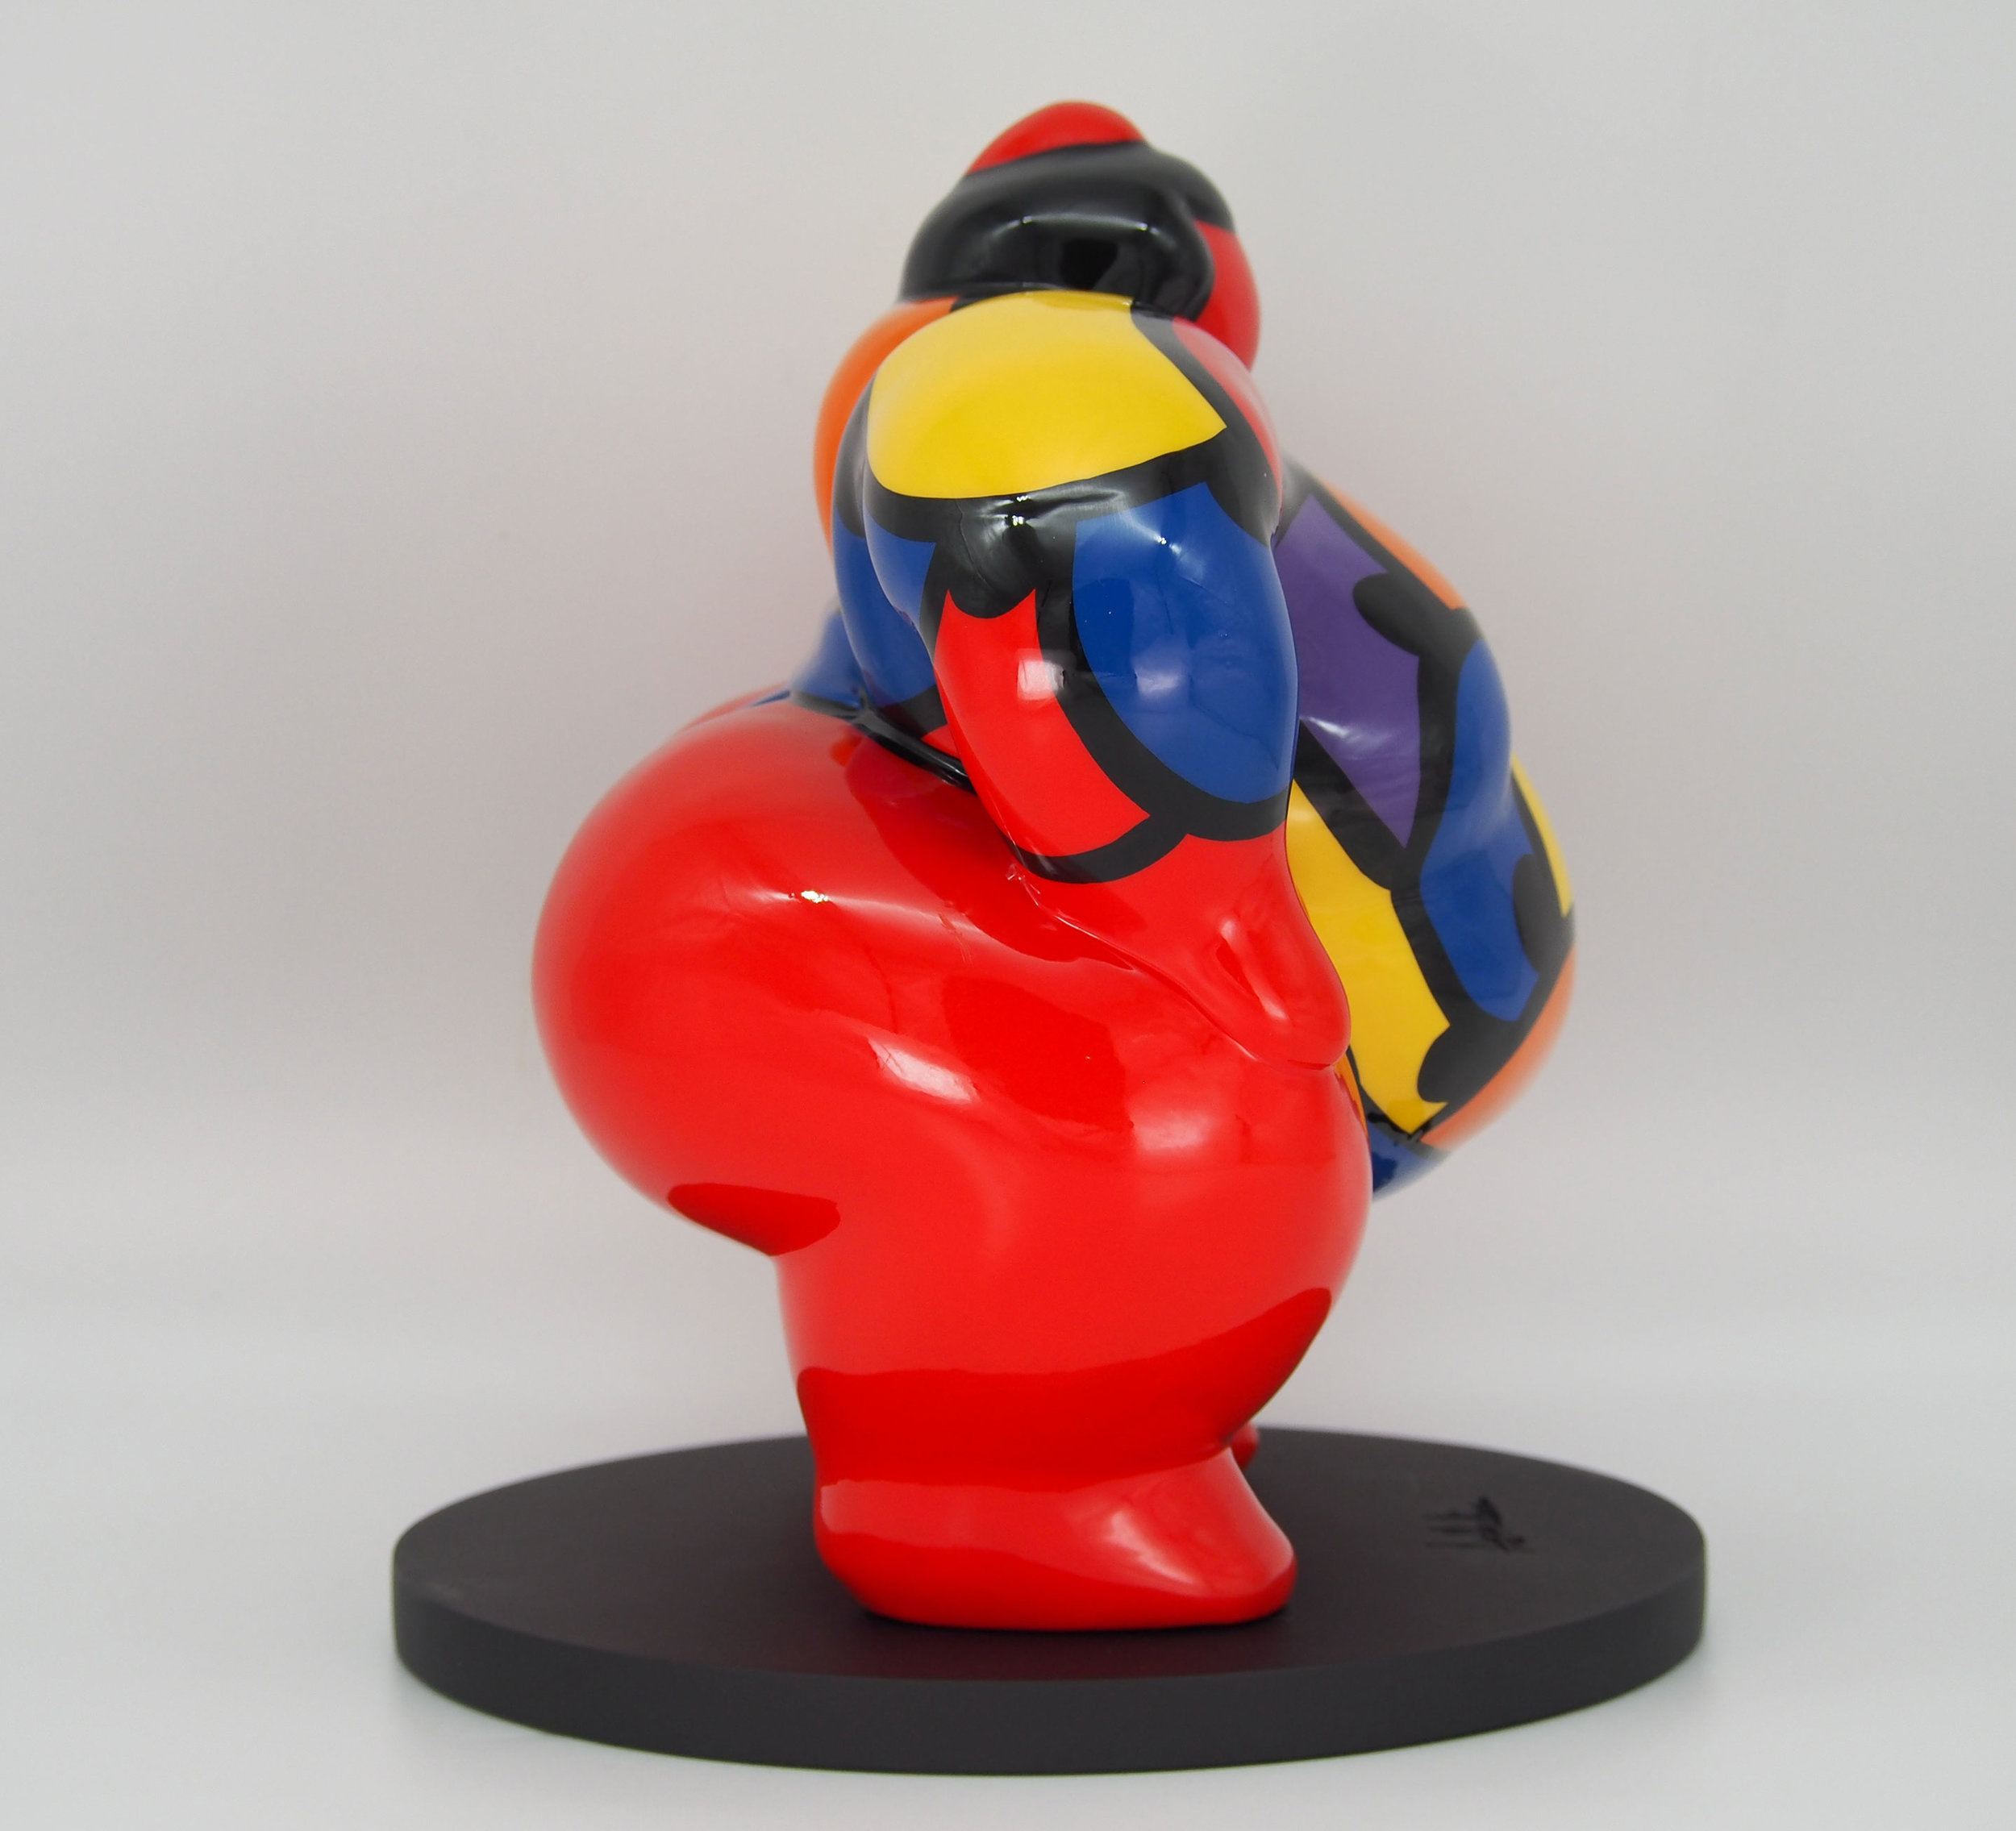 Sumo Dojo-Iri Koya Artheline Nazare-Aga Pop art Sculpture Side 02